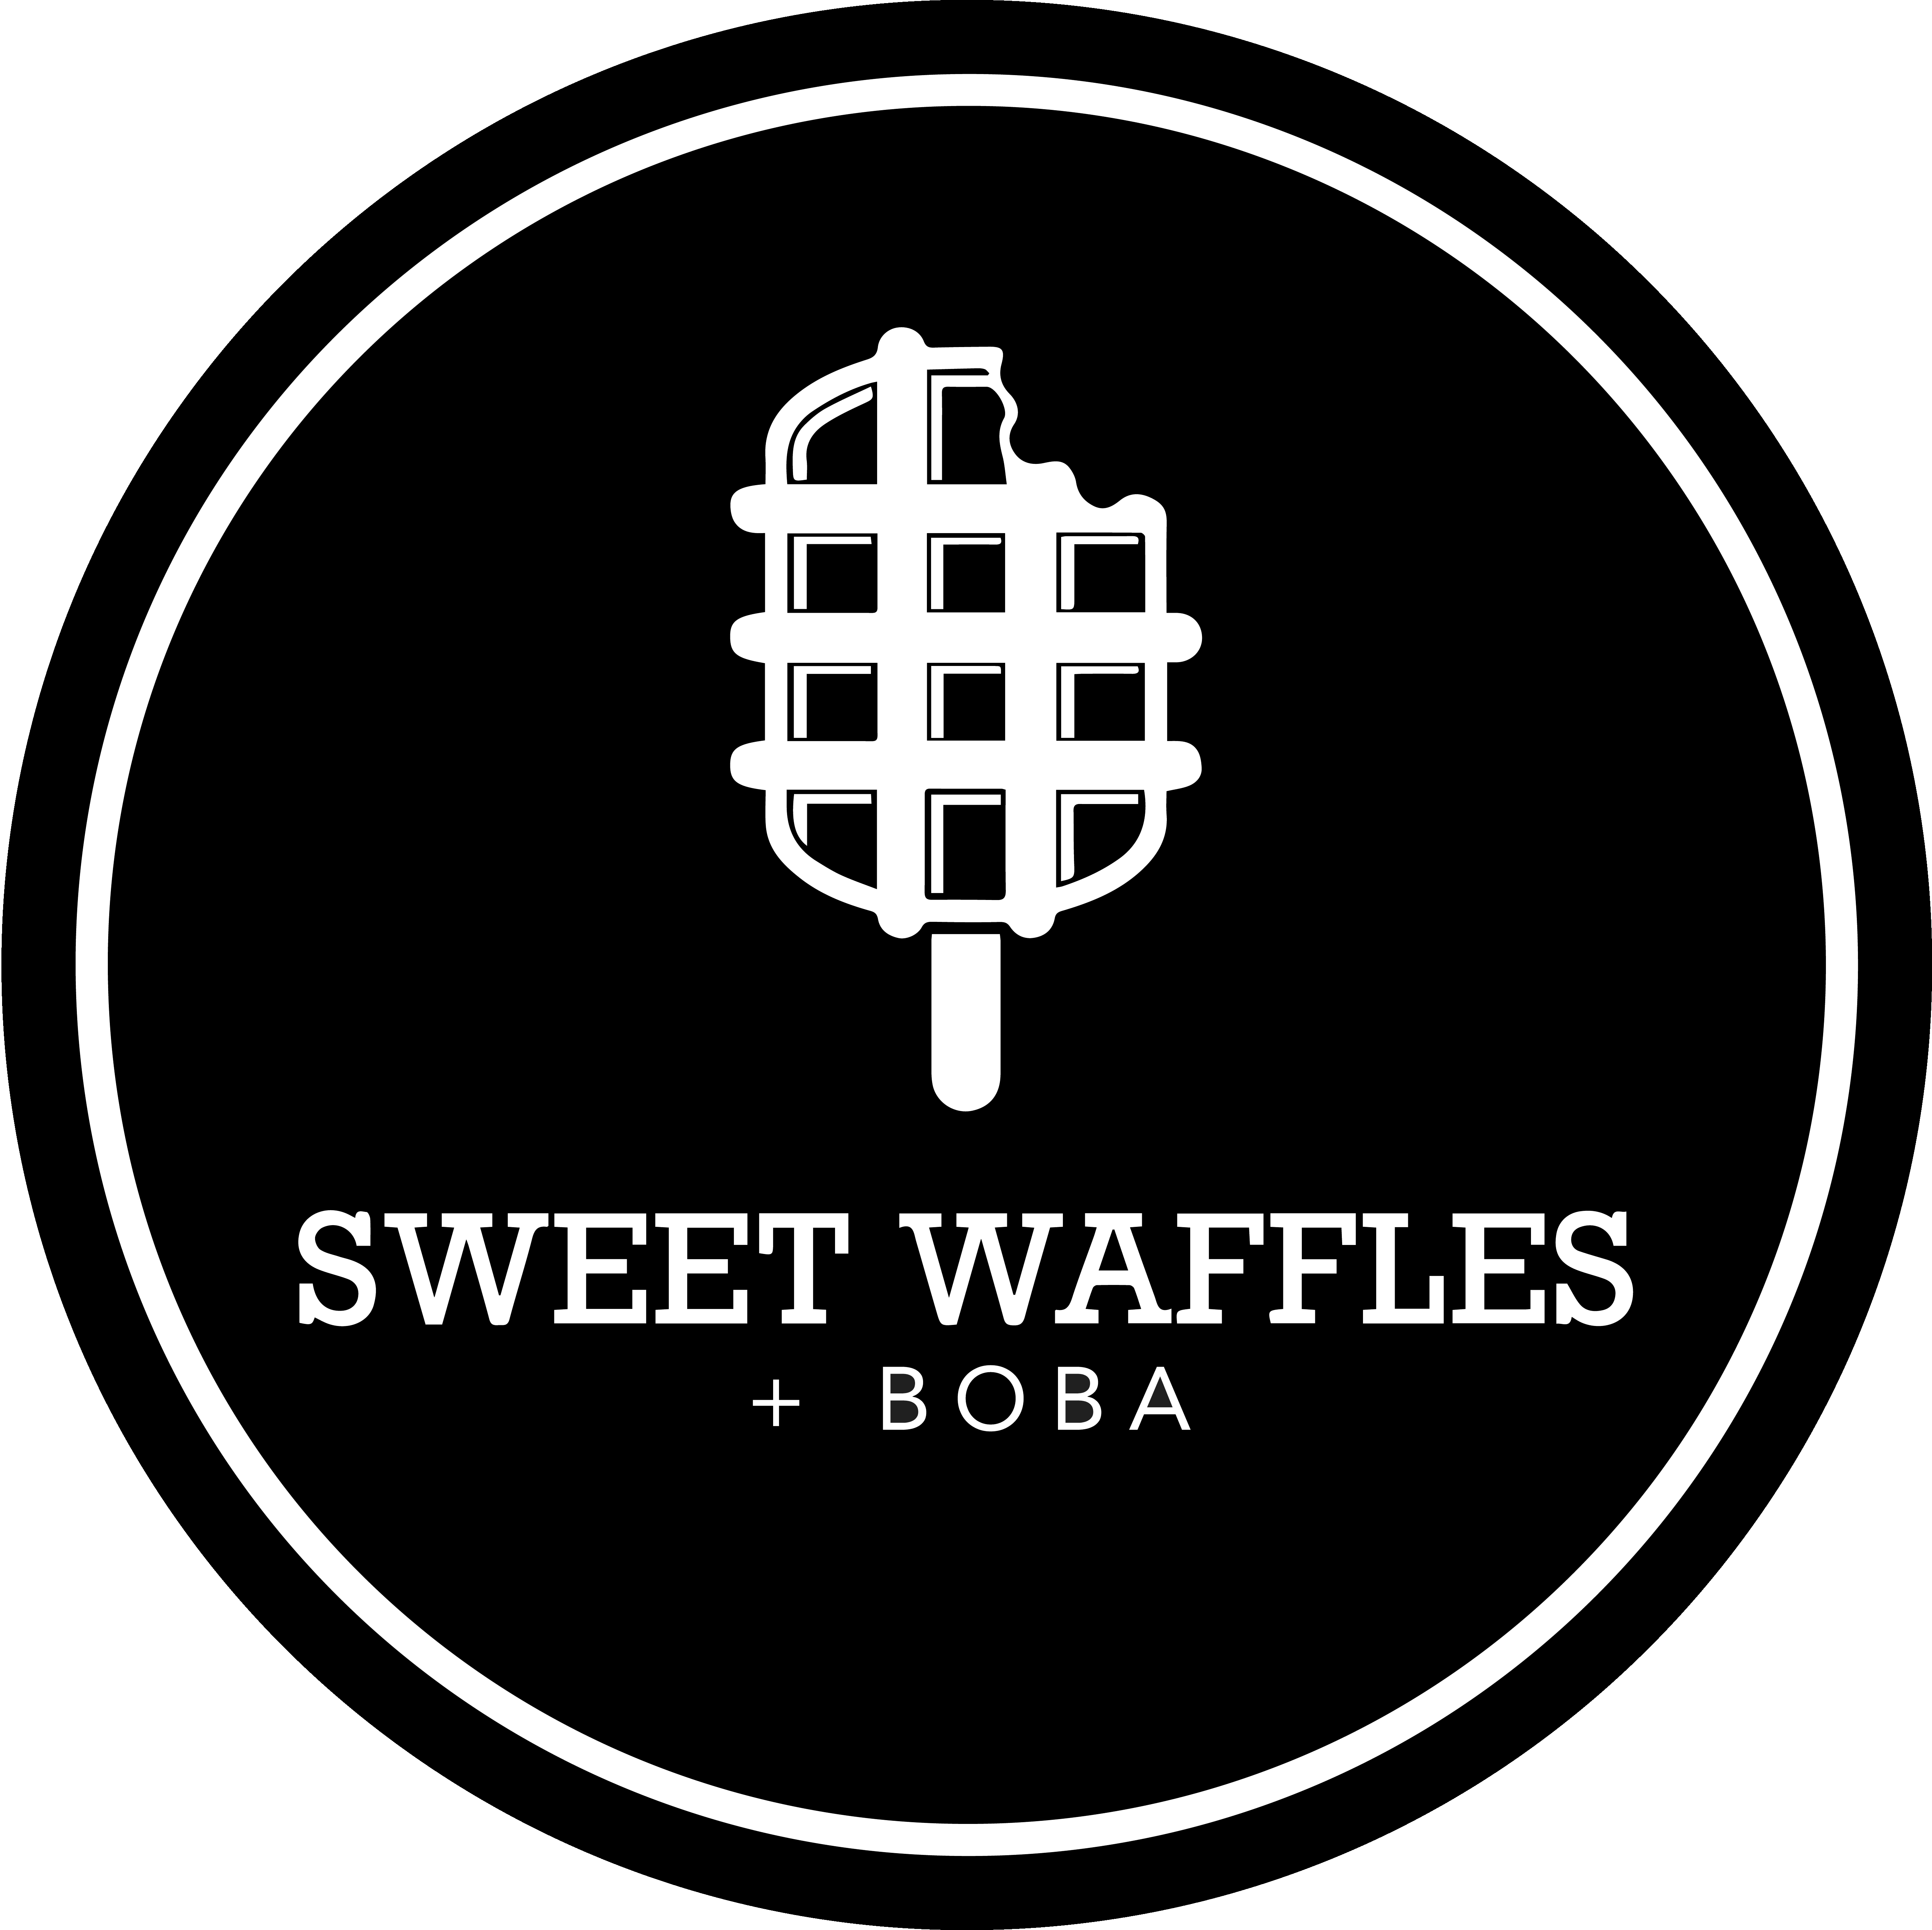 Sweet Waffles and Boba